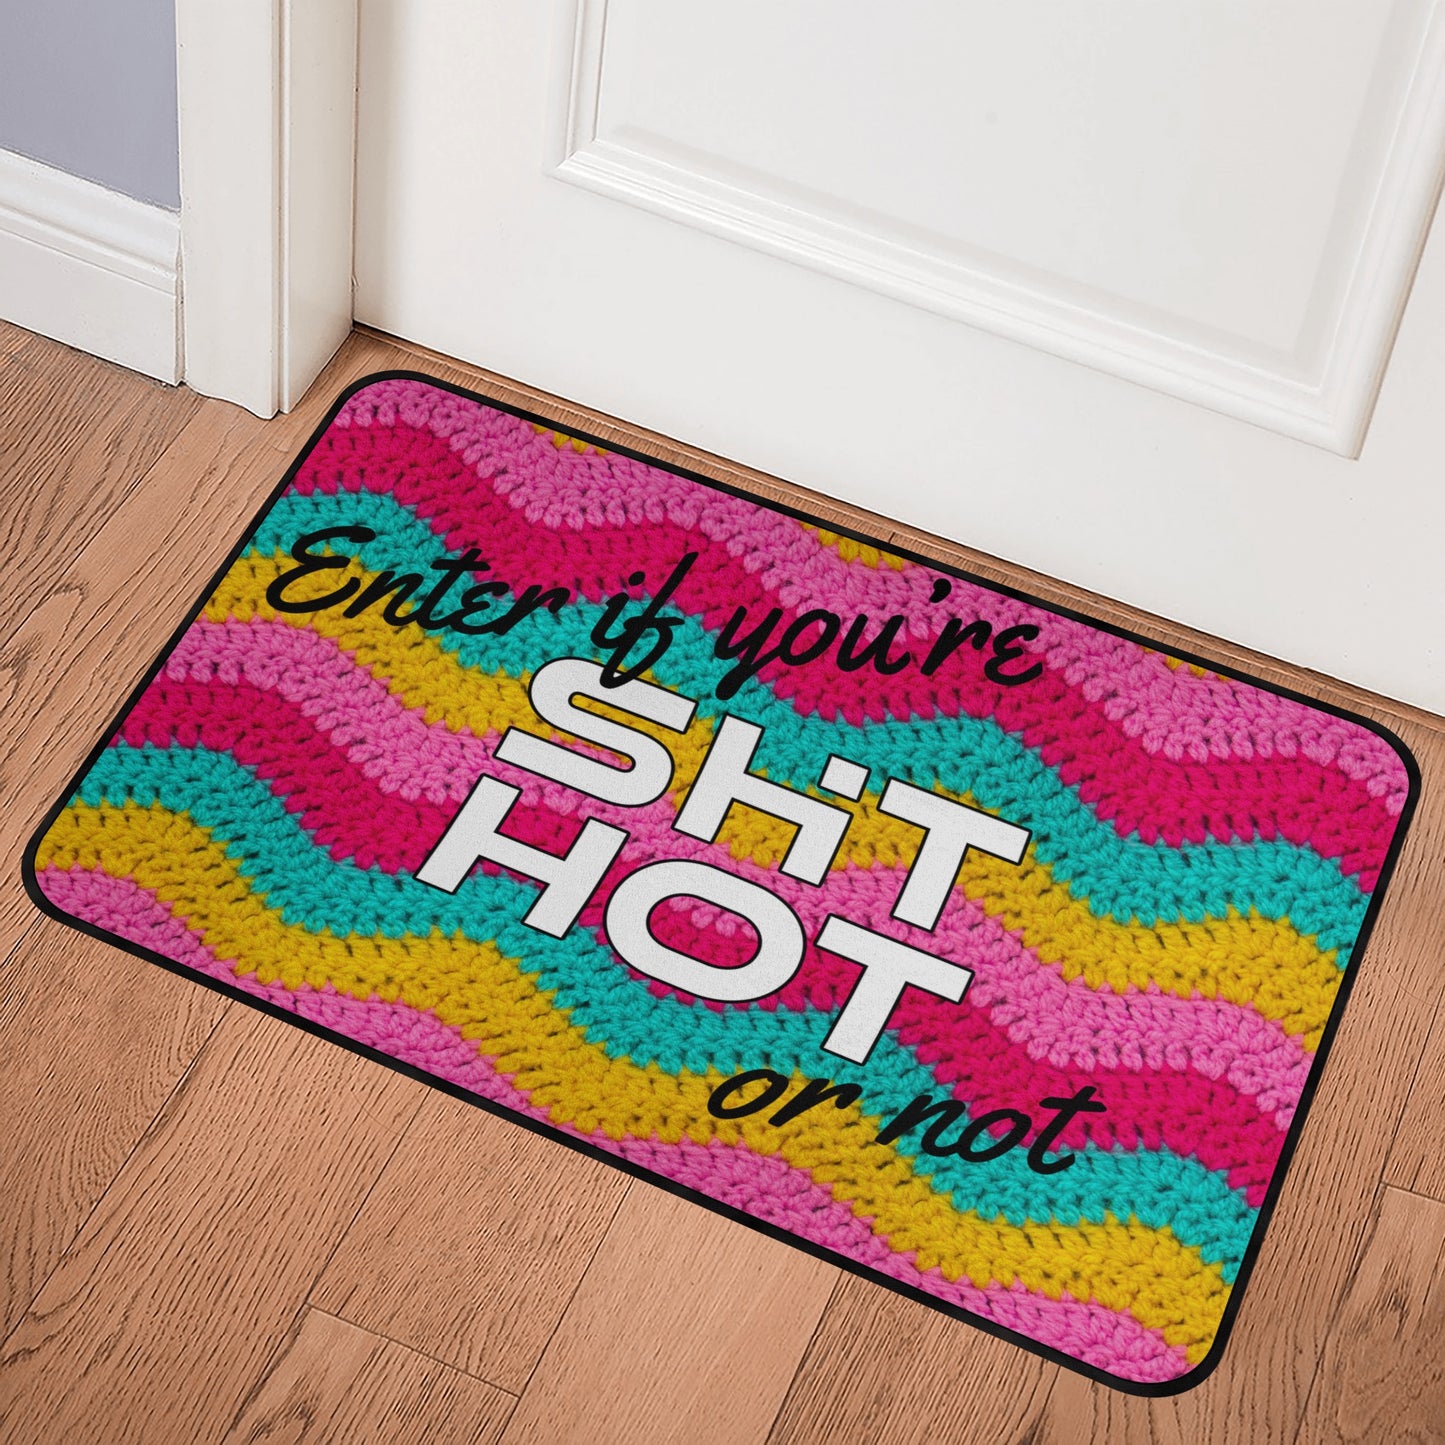 ShitHot Doormat Crochet - ShitHot Or Not